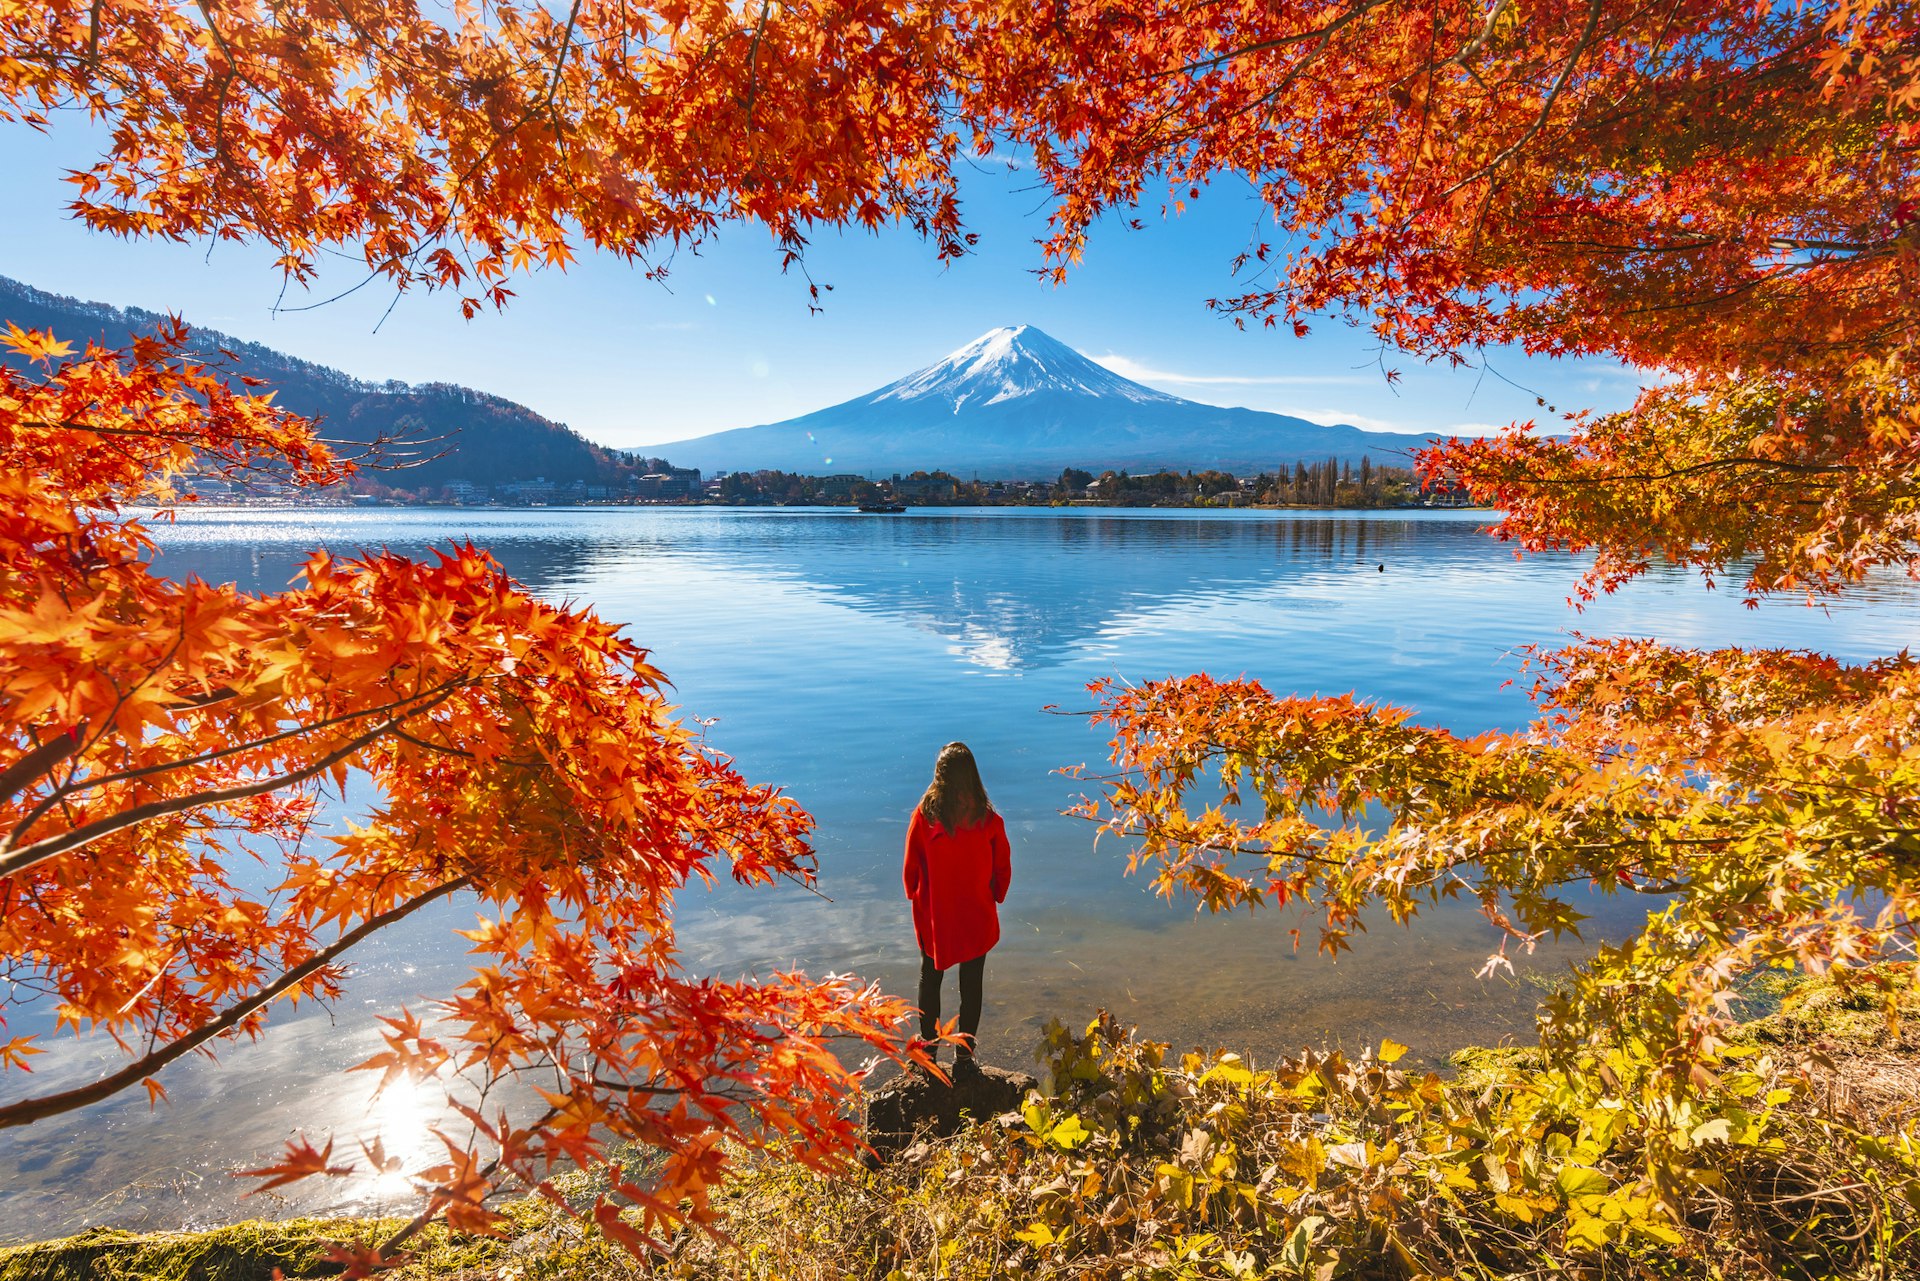 Tourist admiring Mt. Fuji in autumn, Japan